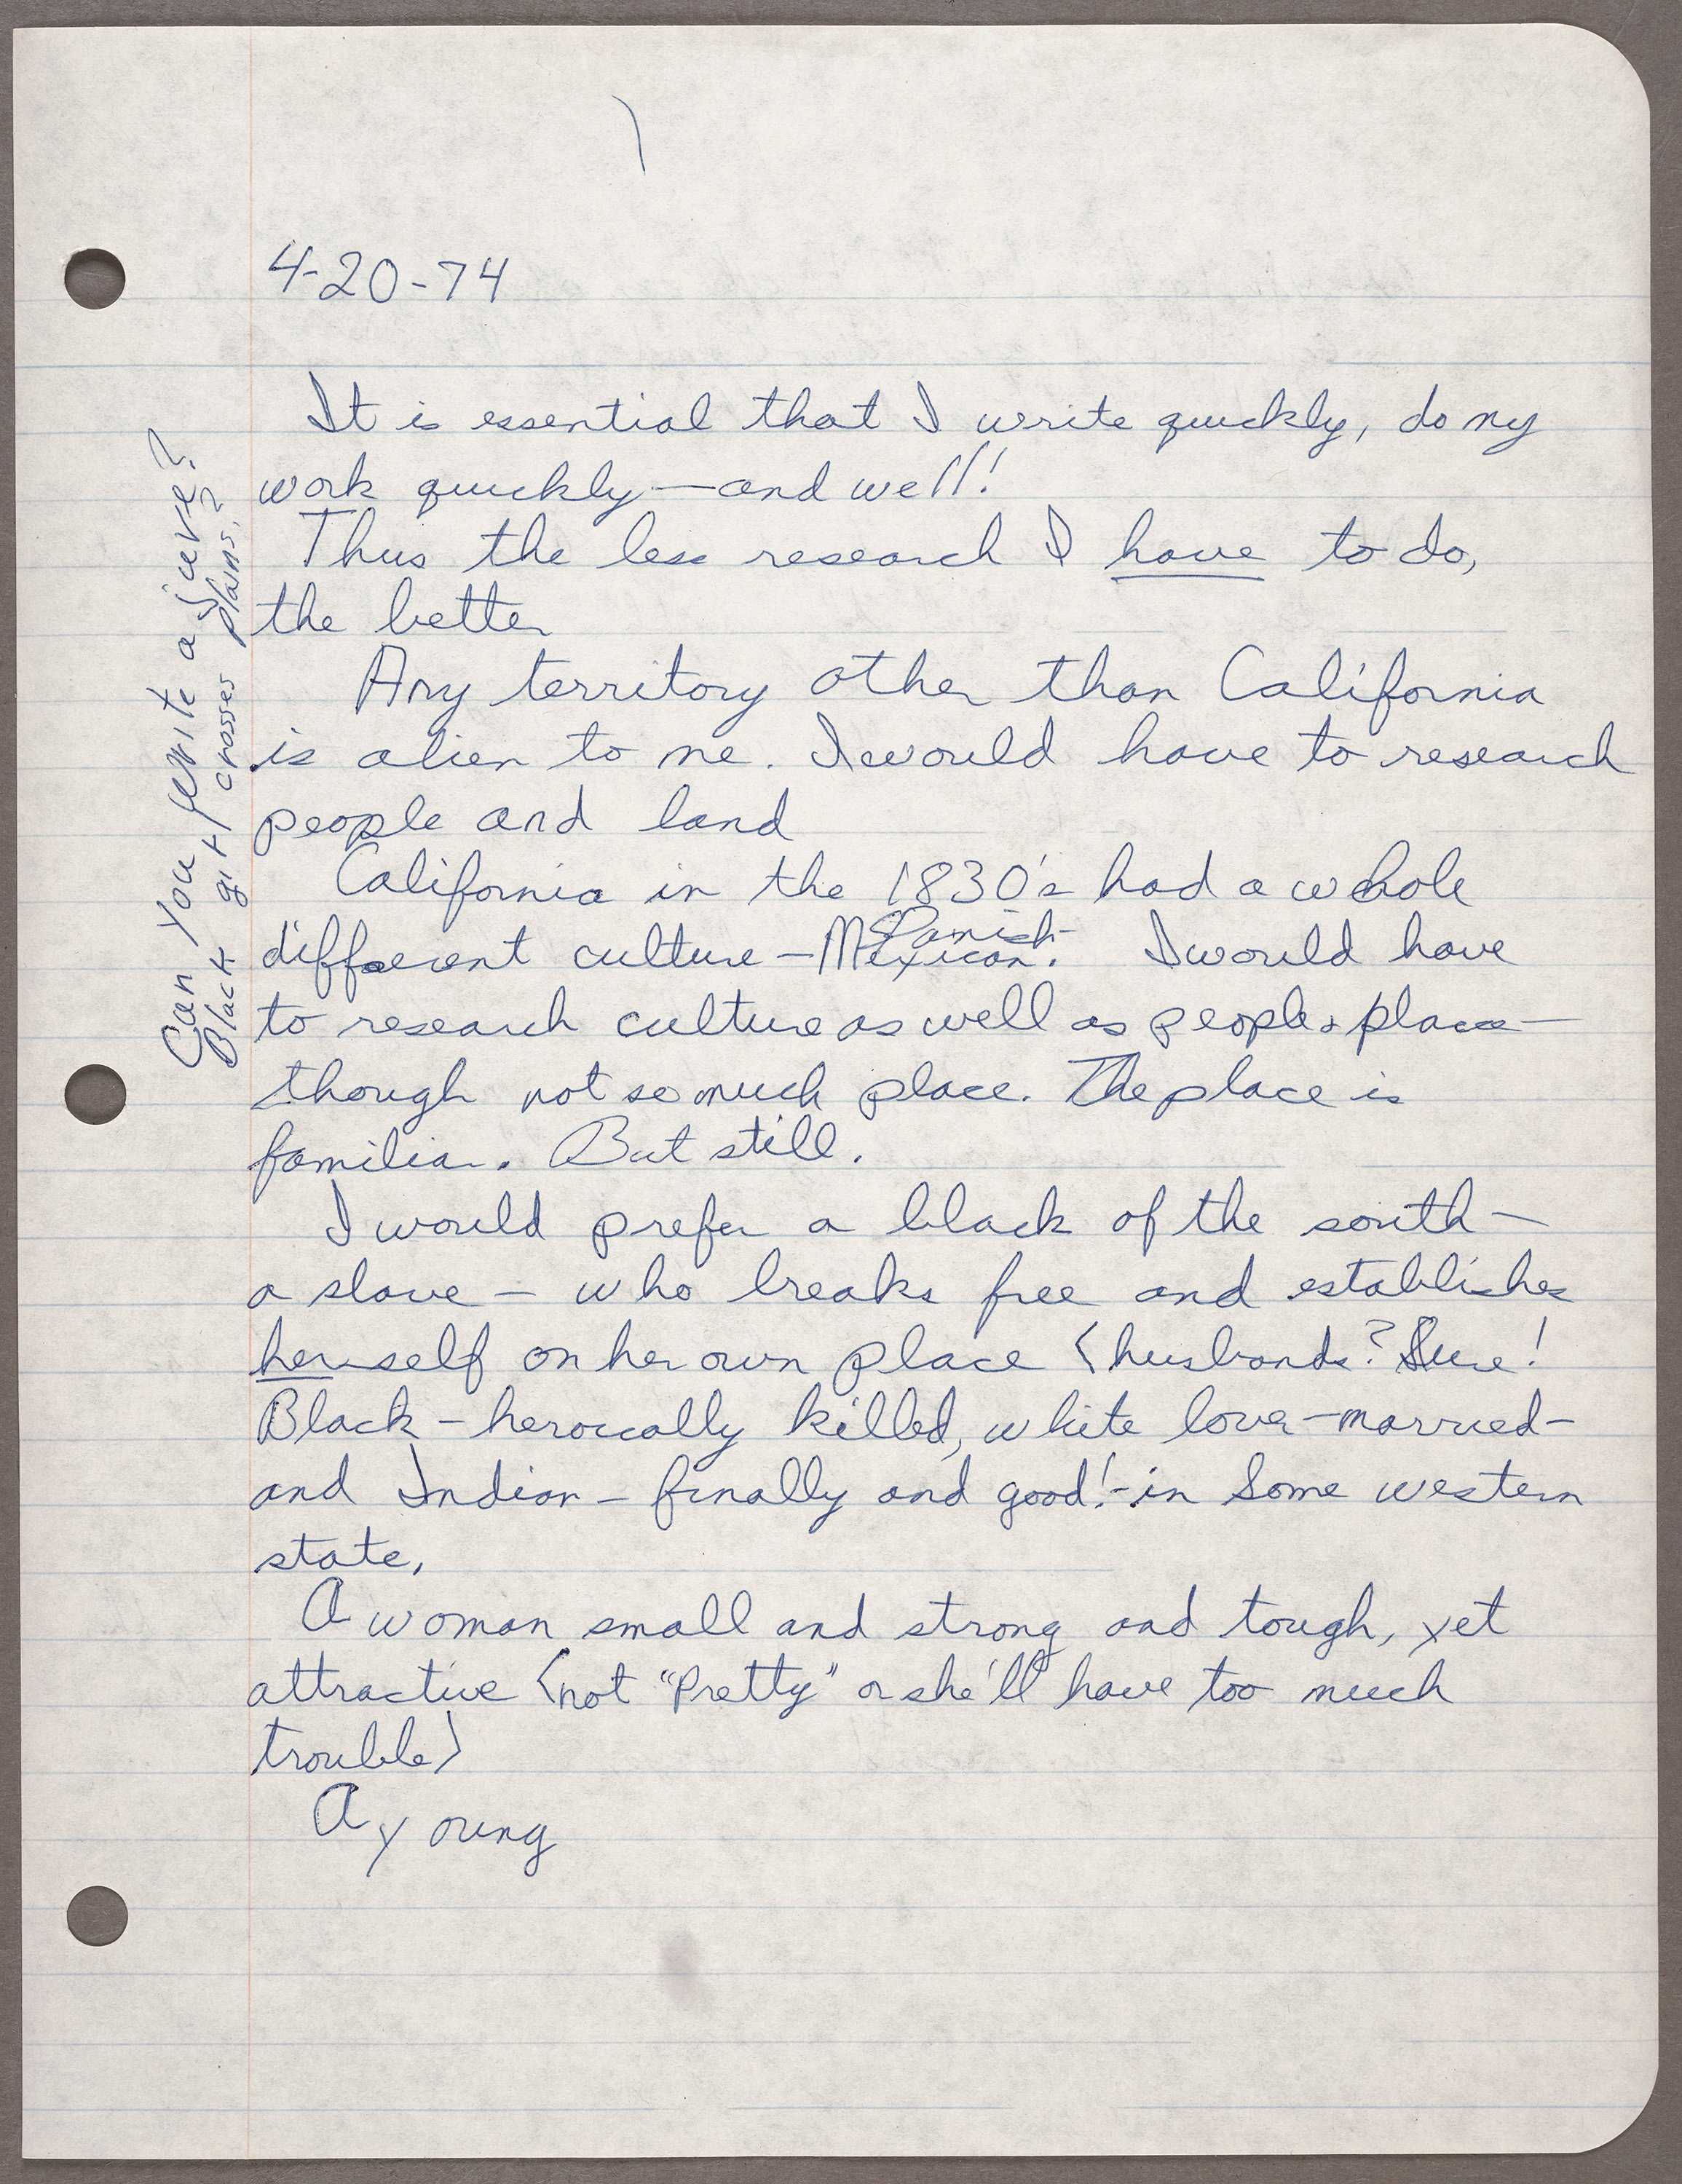 A light grey loose leaf paper and Octavia's handwritten script in dark blue ink, dated 4/20/74.